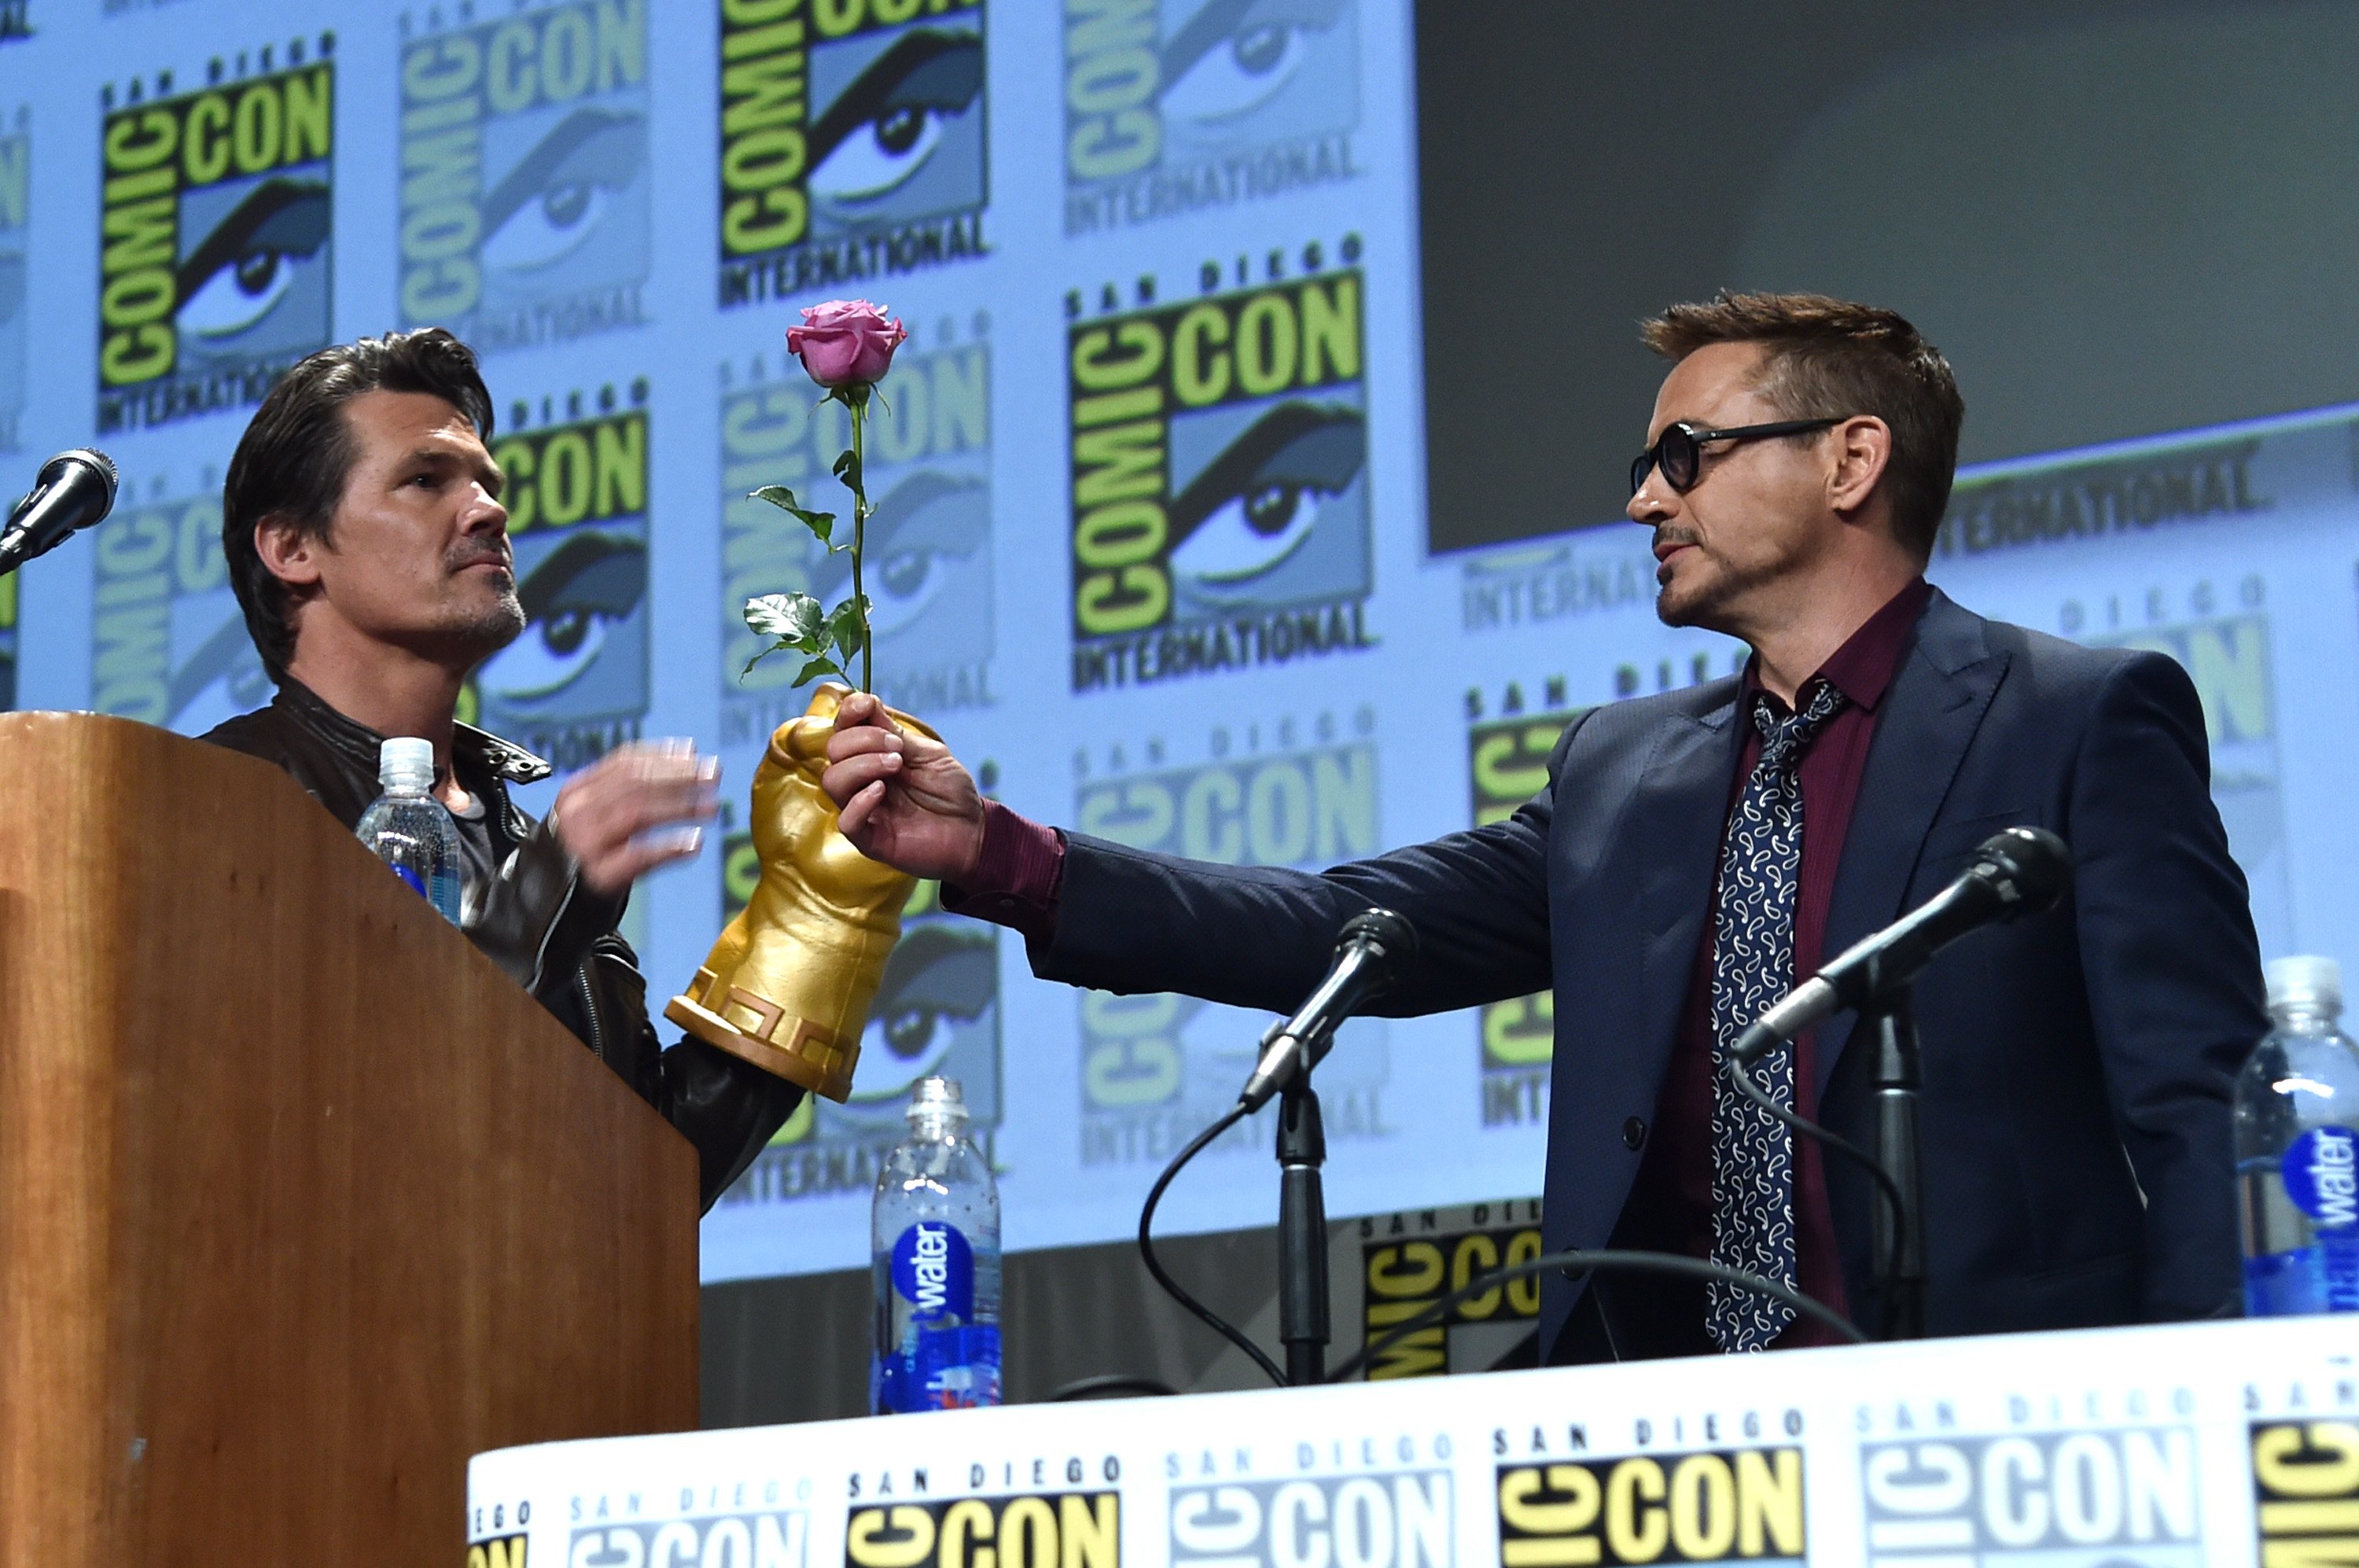 Josh Brolin and Robert Downey Jr. pound fists at Comic-Con